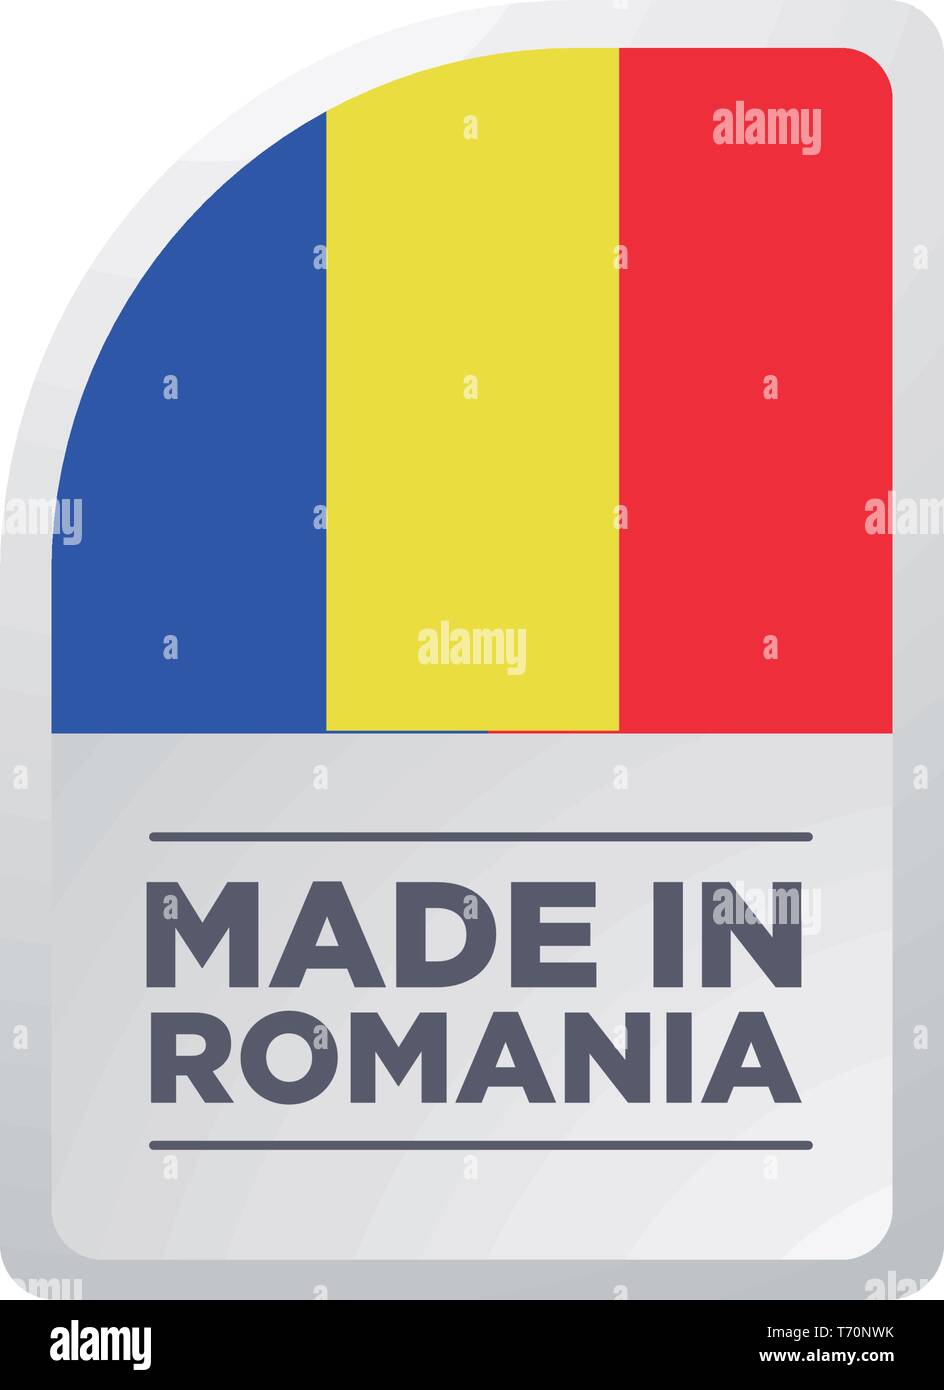 MADE IN ROMANIA Stock Vector